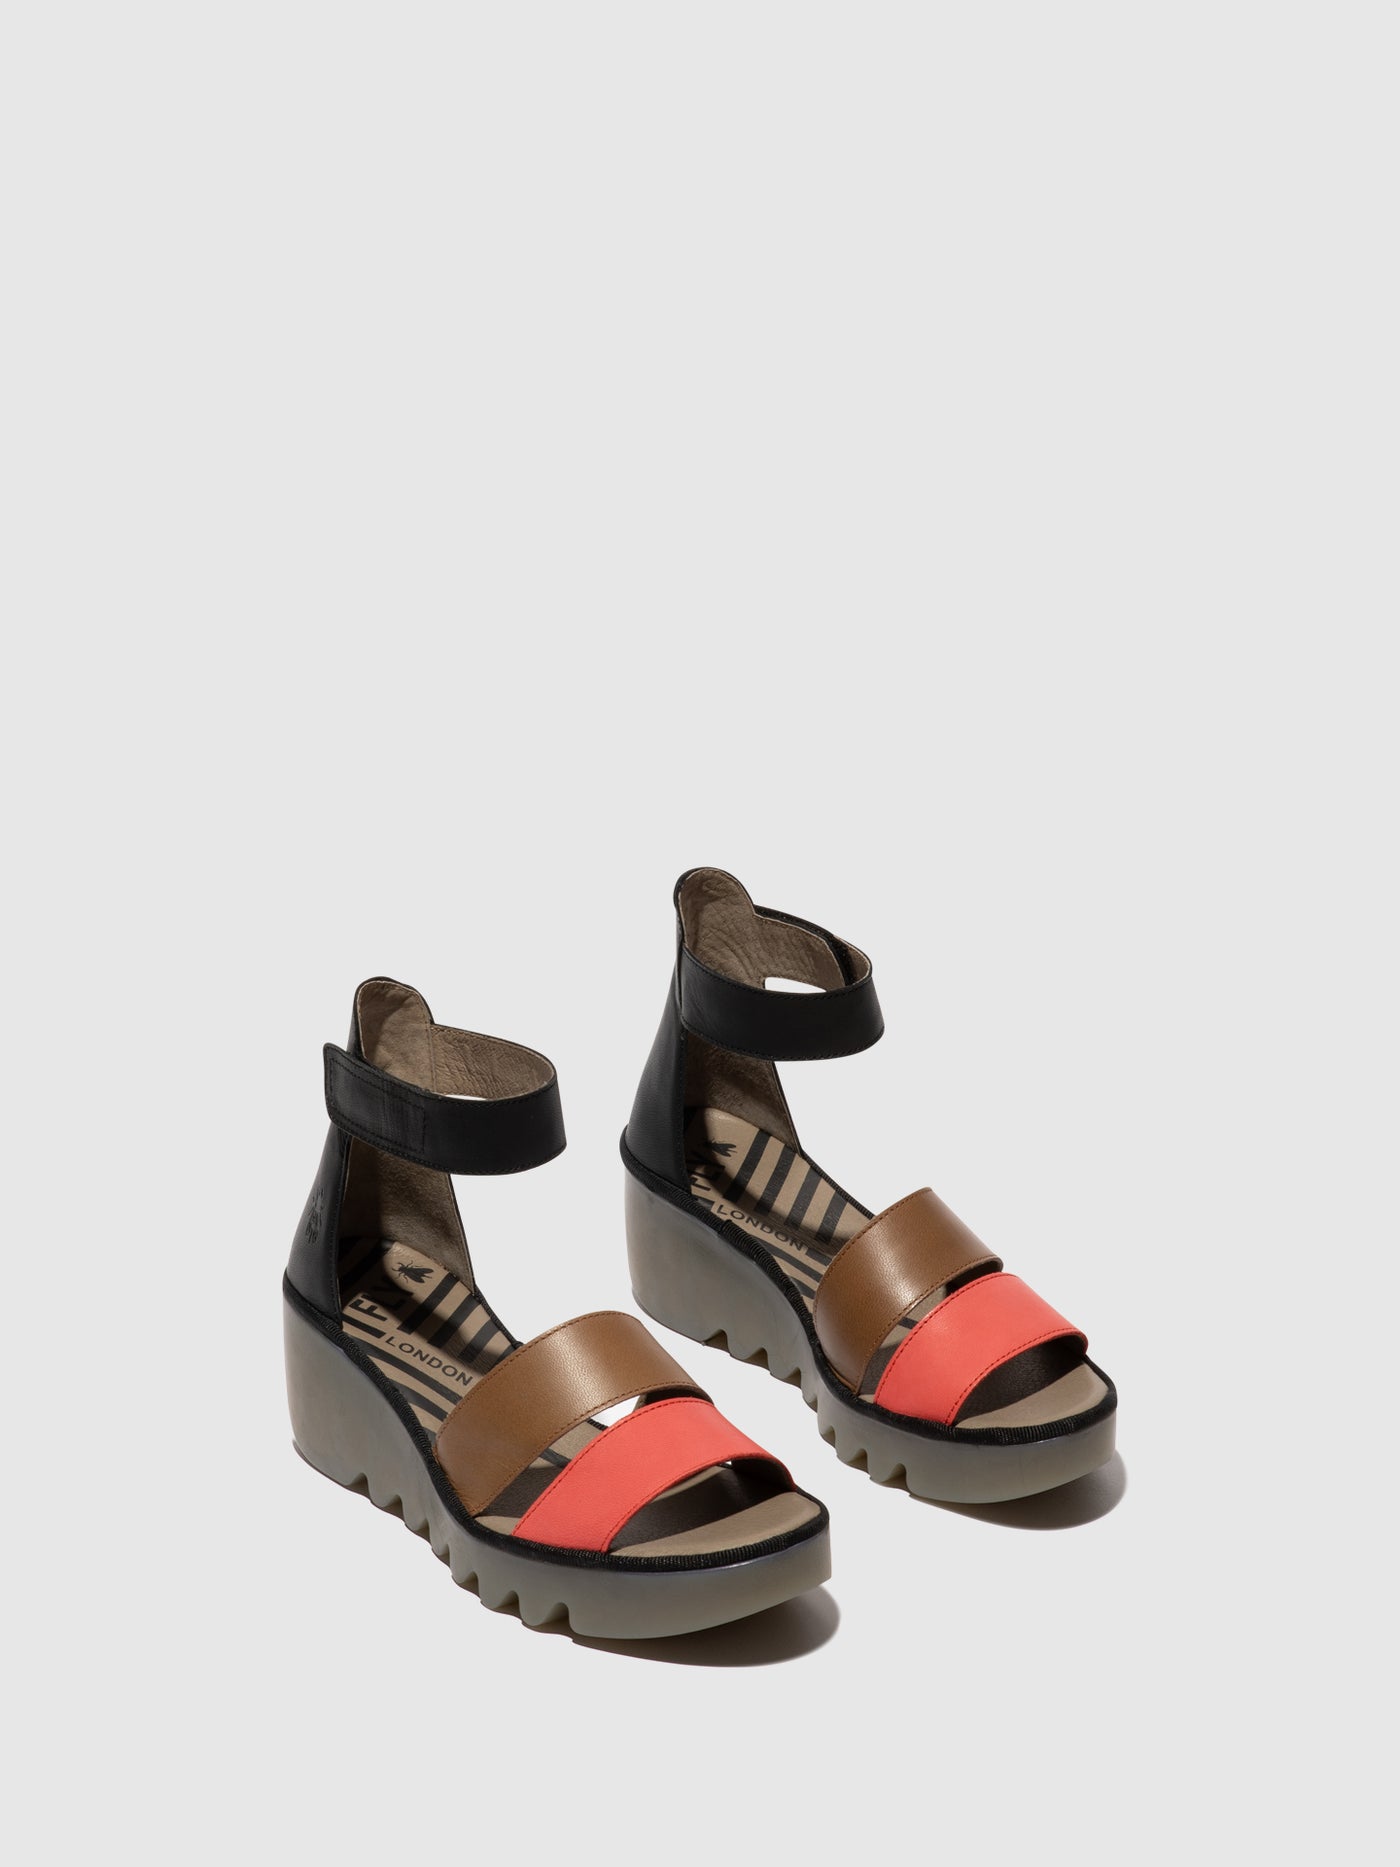 Strappy Sandals BONO290FLY RASPBERRY/GROUND/BLACK